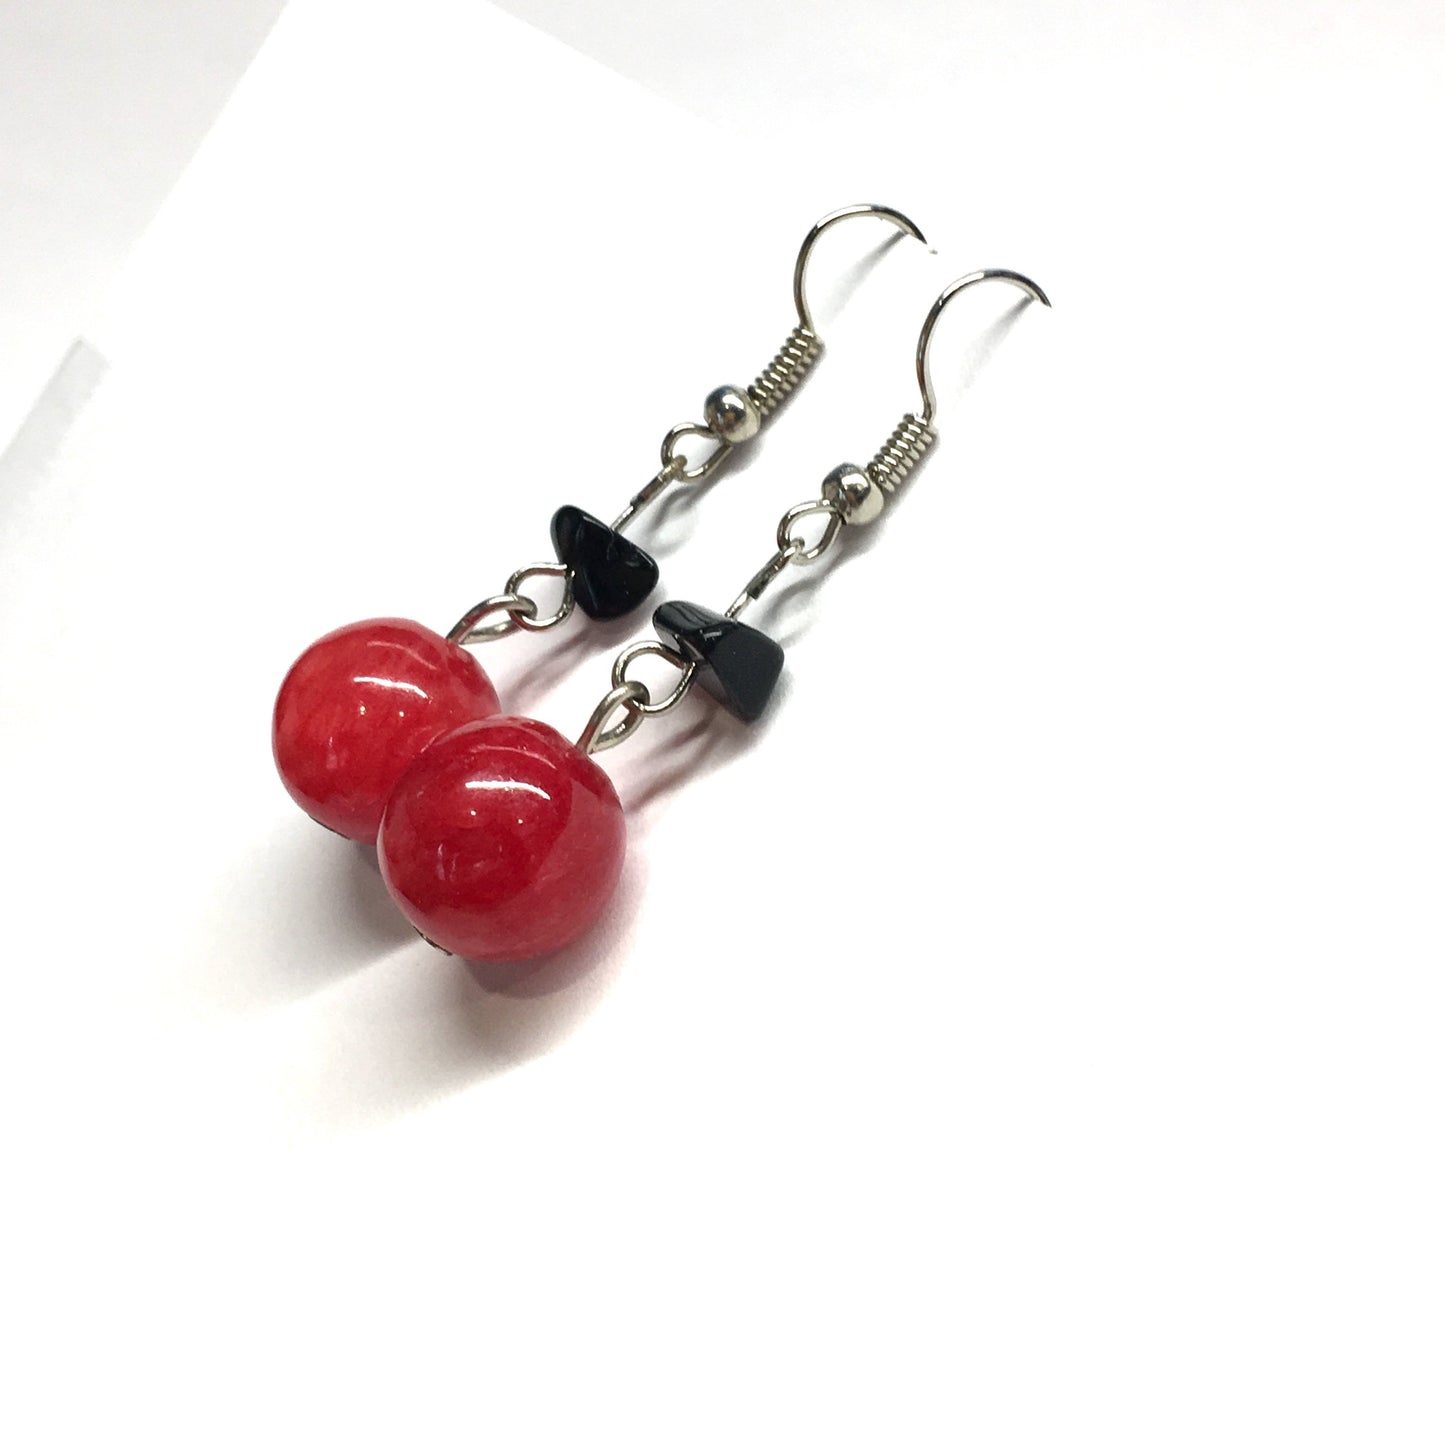 Dangle Earrings - Perfect Pop of Red + Black Bead Ball Drop Earrings - Discount Fashion Jewelry - Blingschlingers